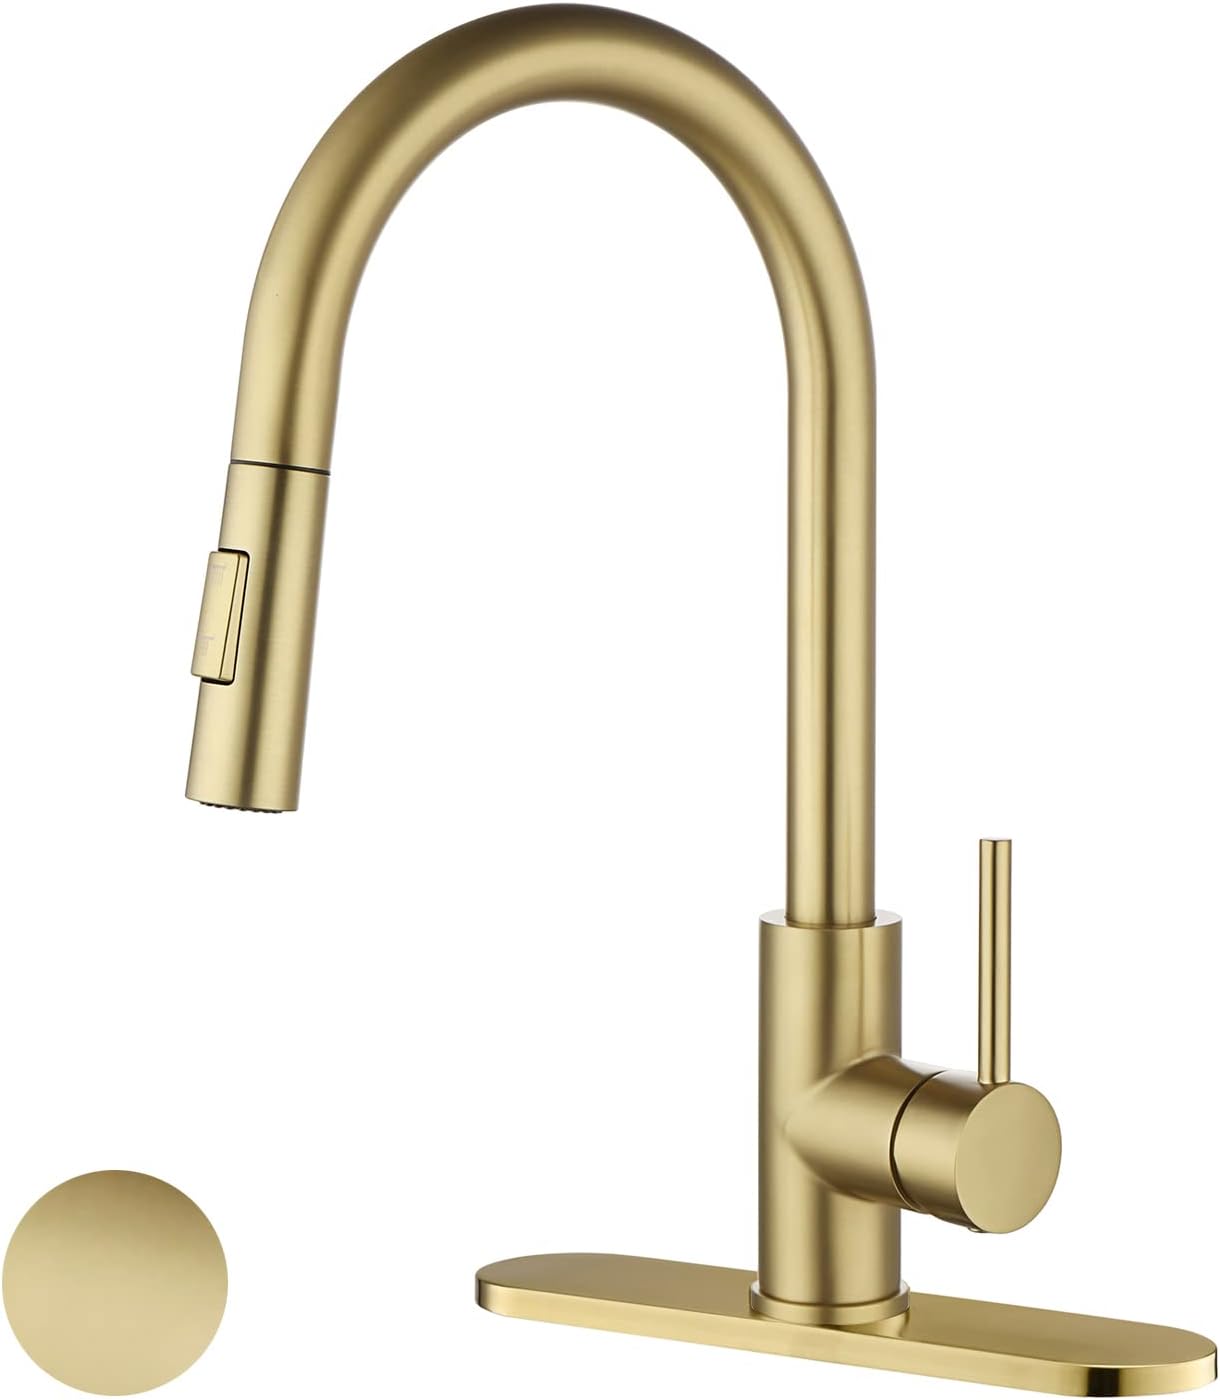 Havin HV601 brass material kitchen faucet with pull down sprayer, Bronze